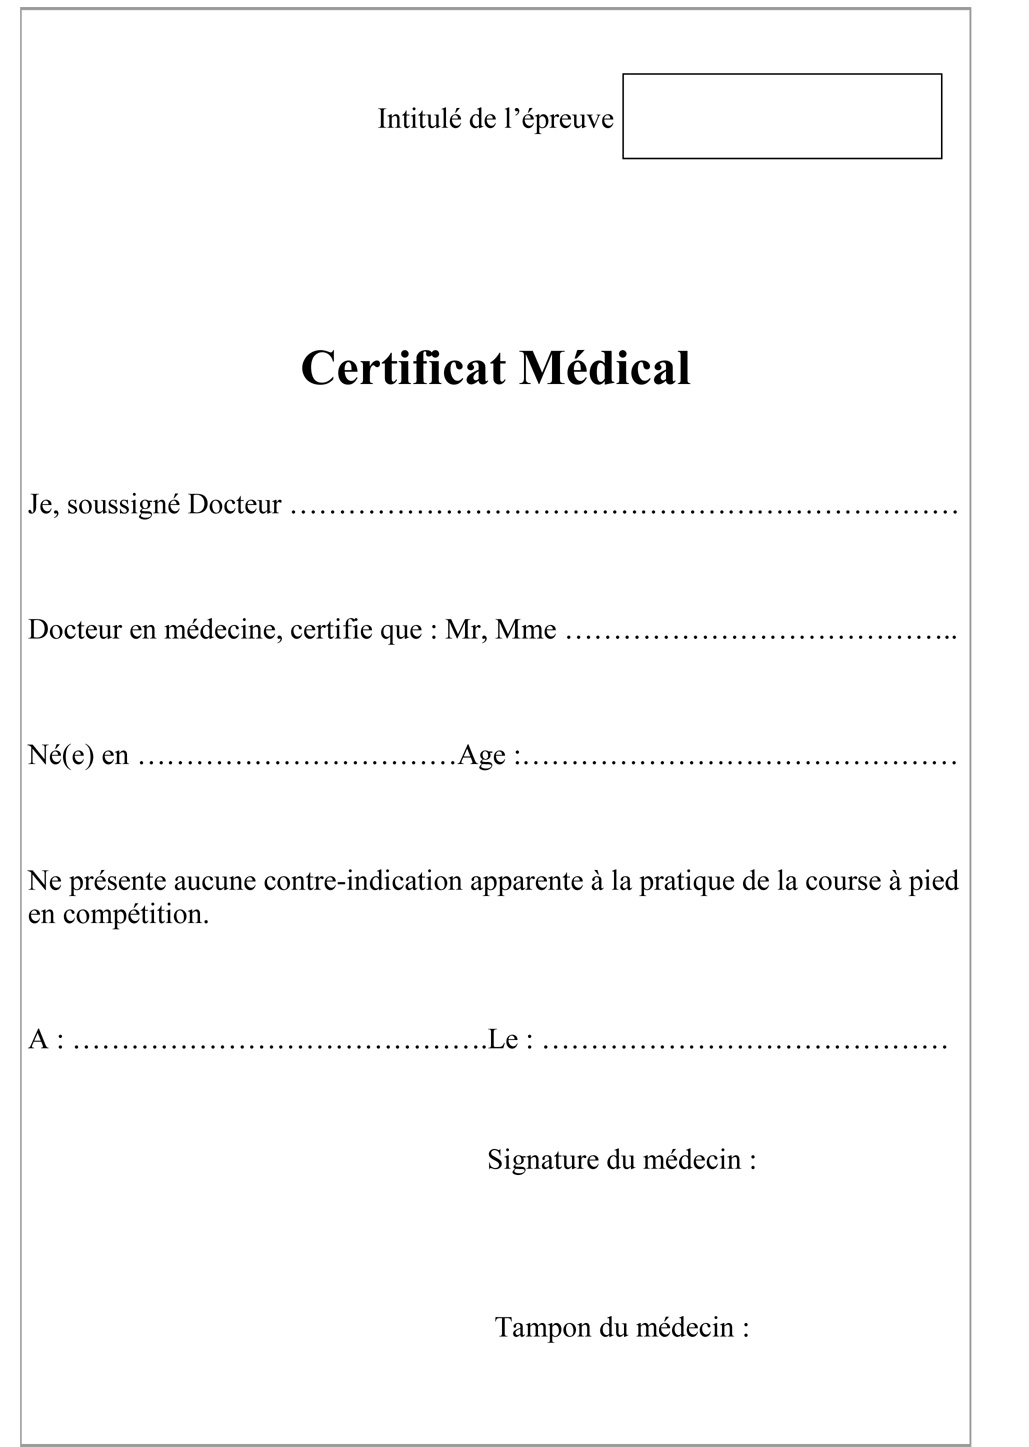 CertificatMedical